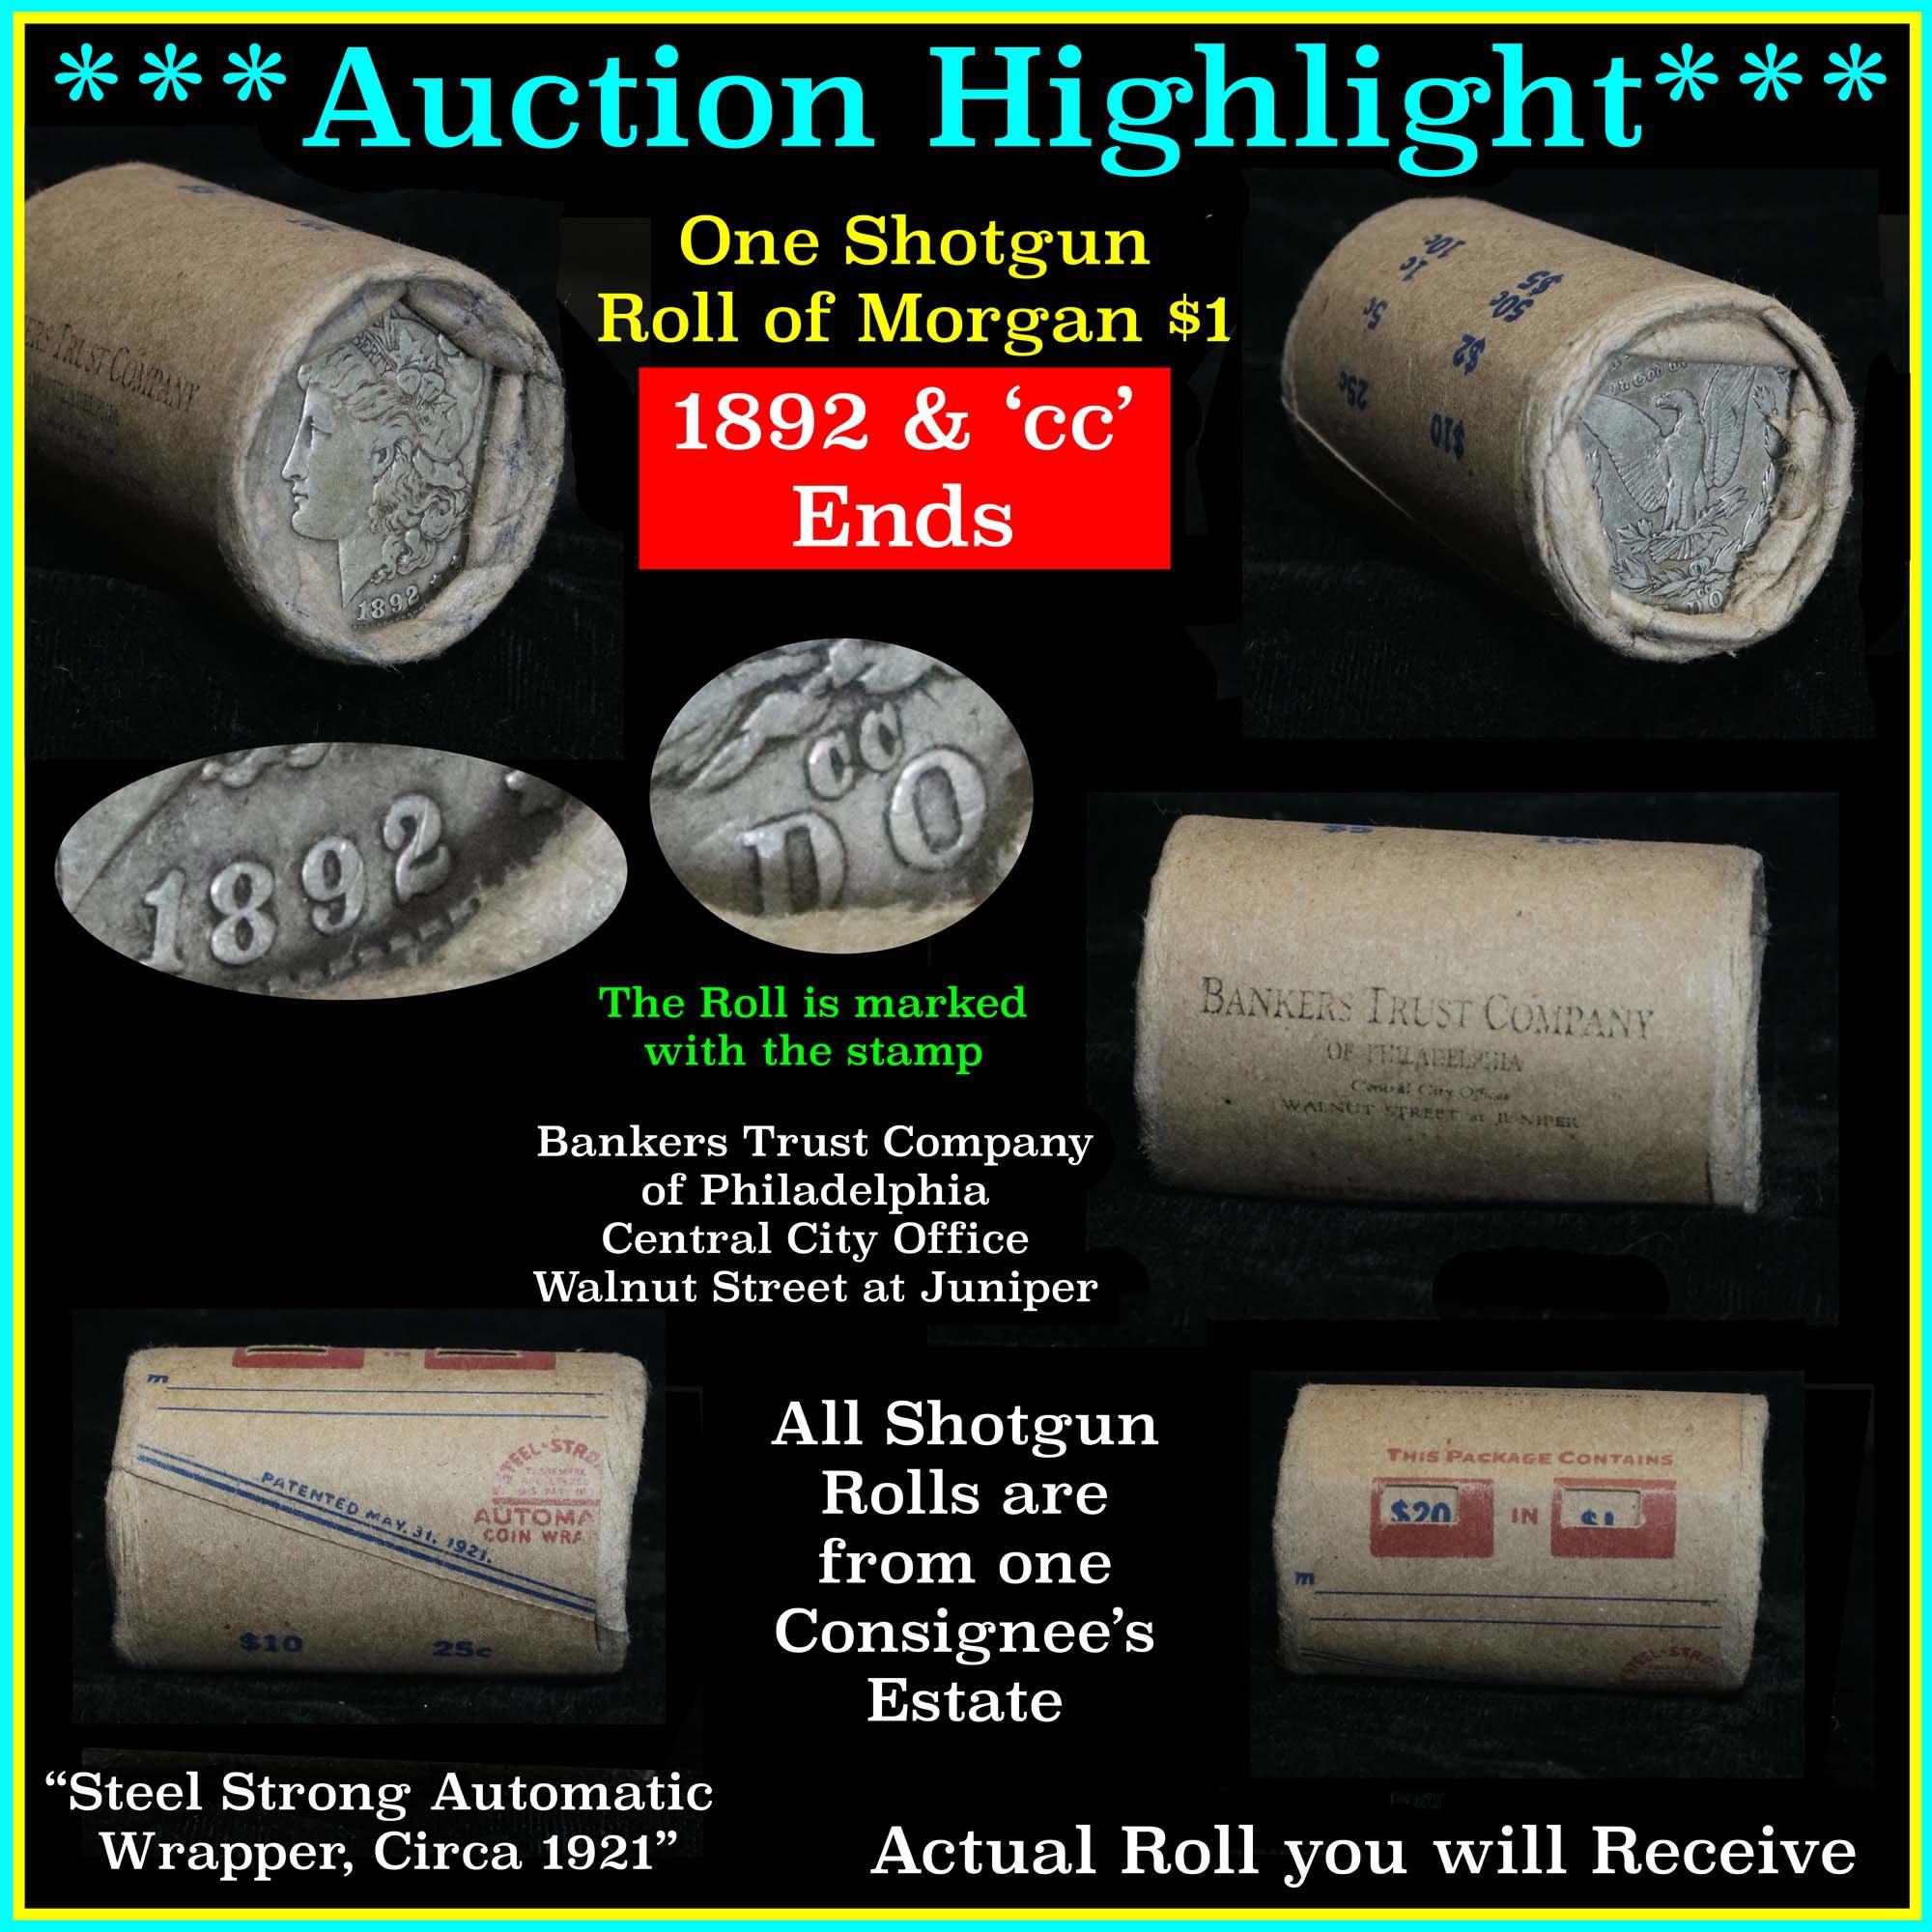 ***Auction Highlight*** Morgan dollar roll ends 1892 & 'cc', better than avg circ Morgan $1 (fc)